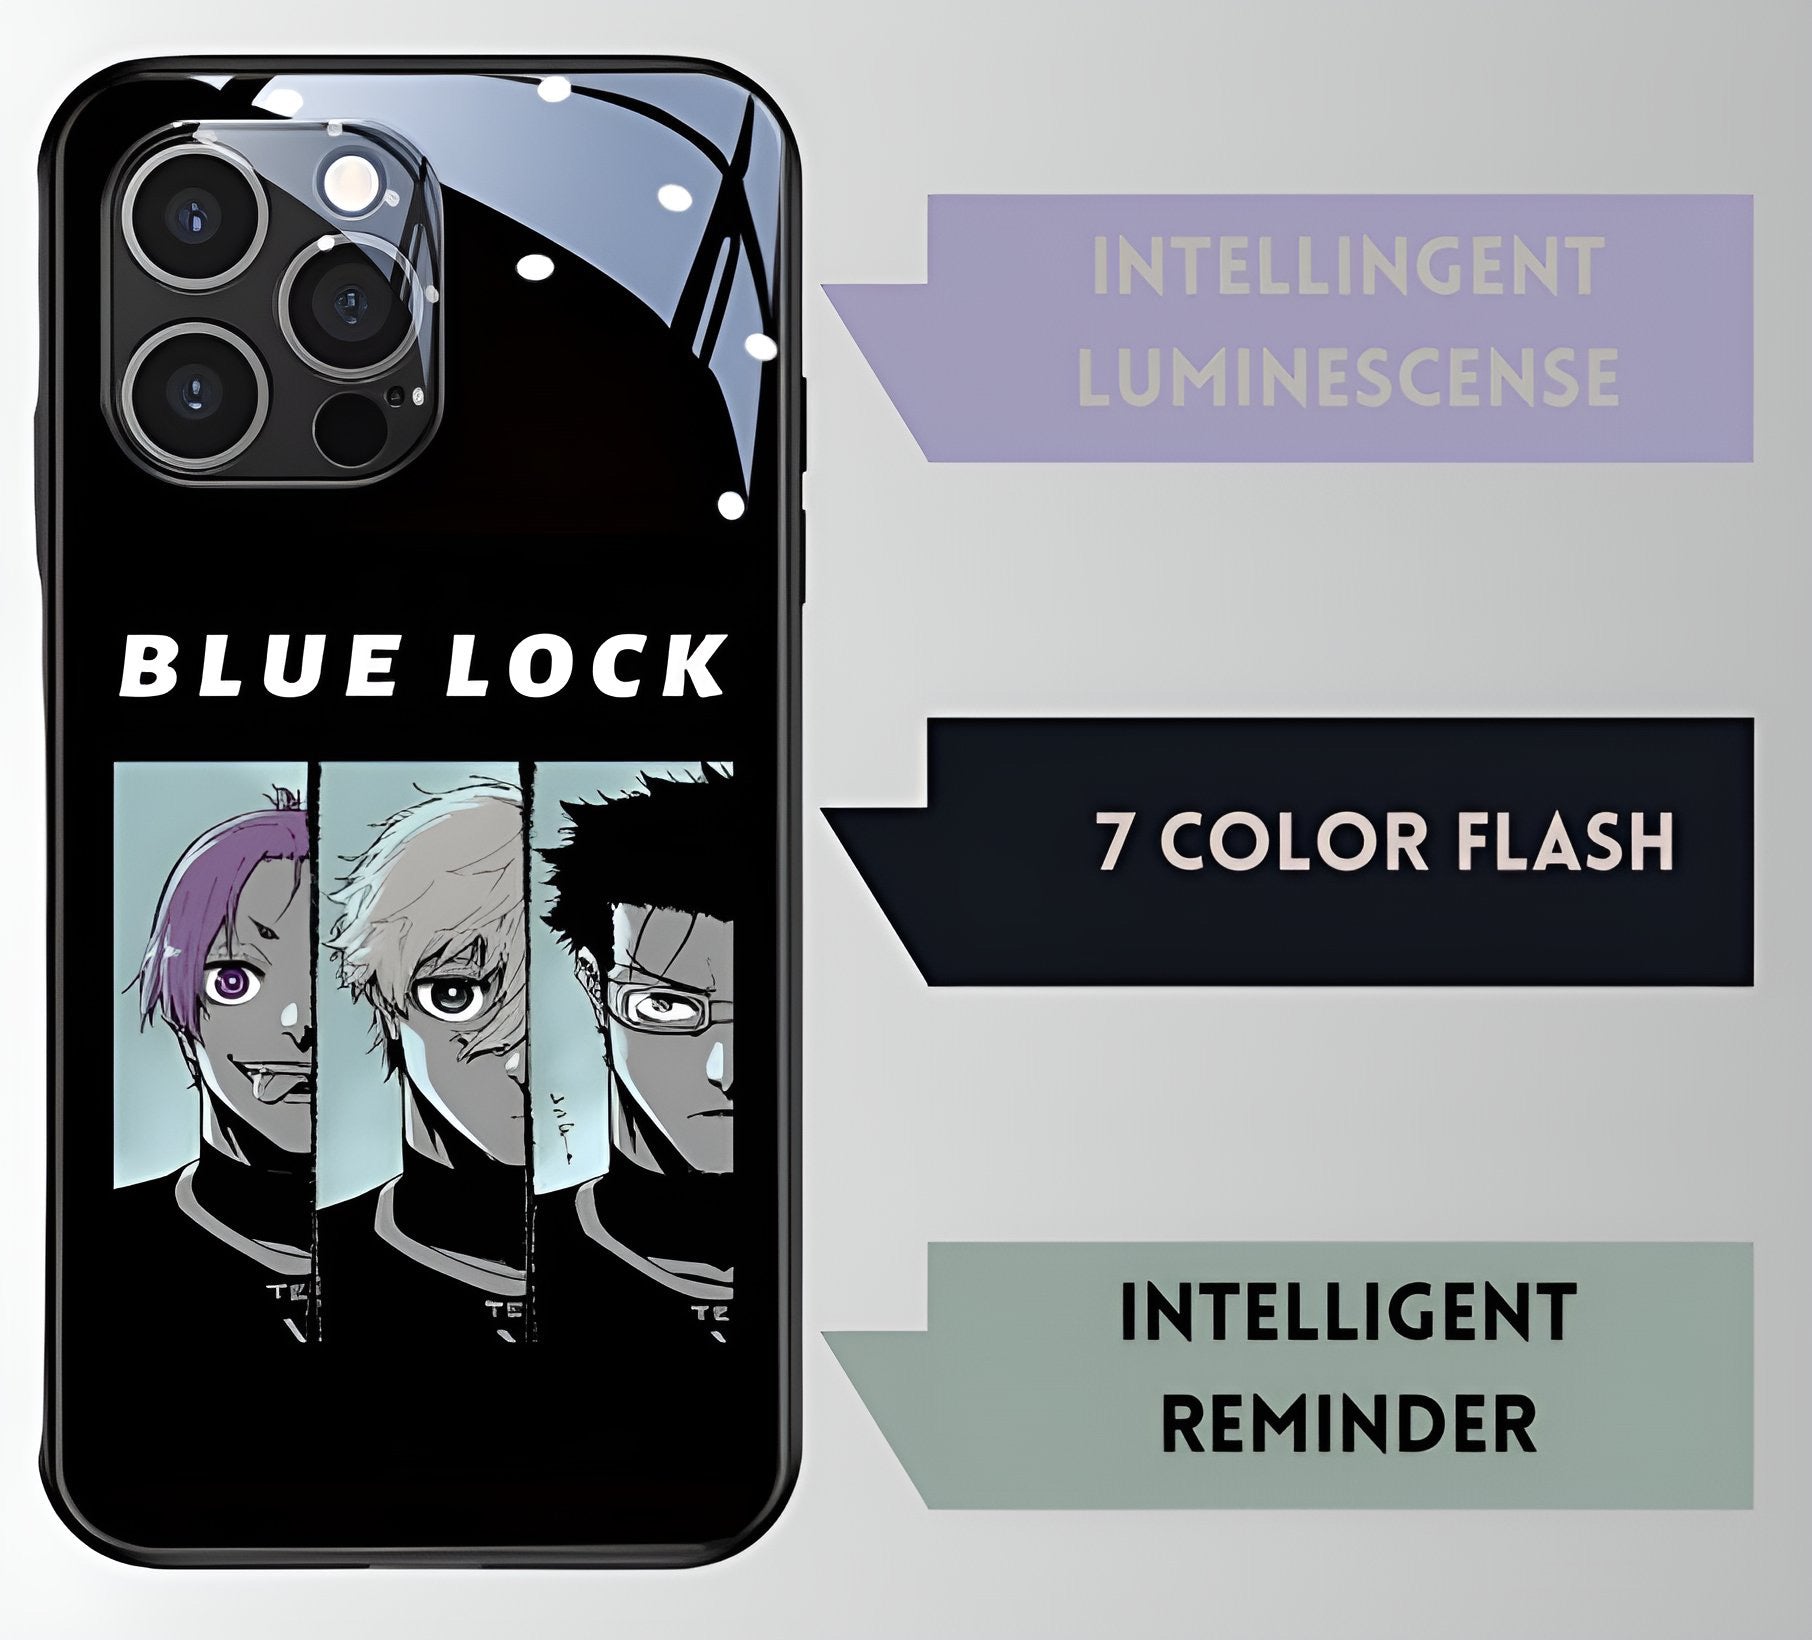 Luxury Light Led Case - Blue Lock Edition - more cases inside